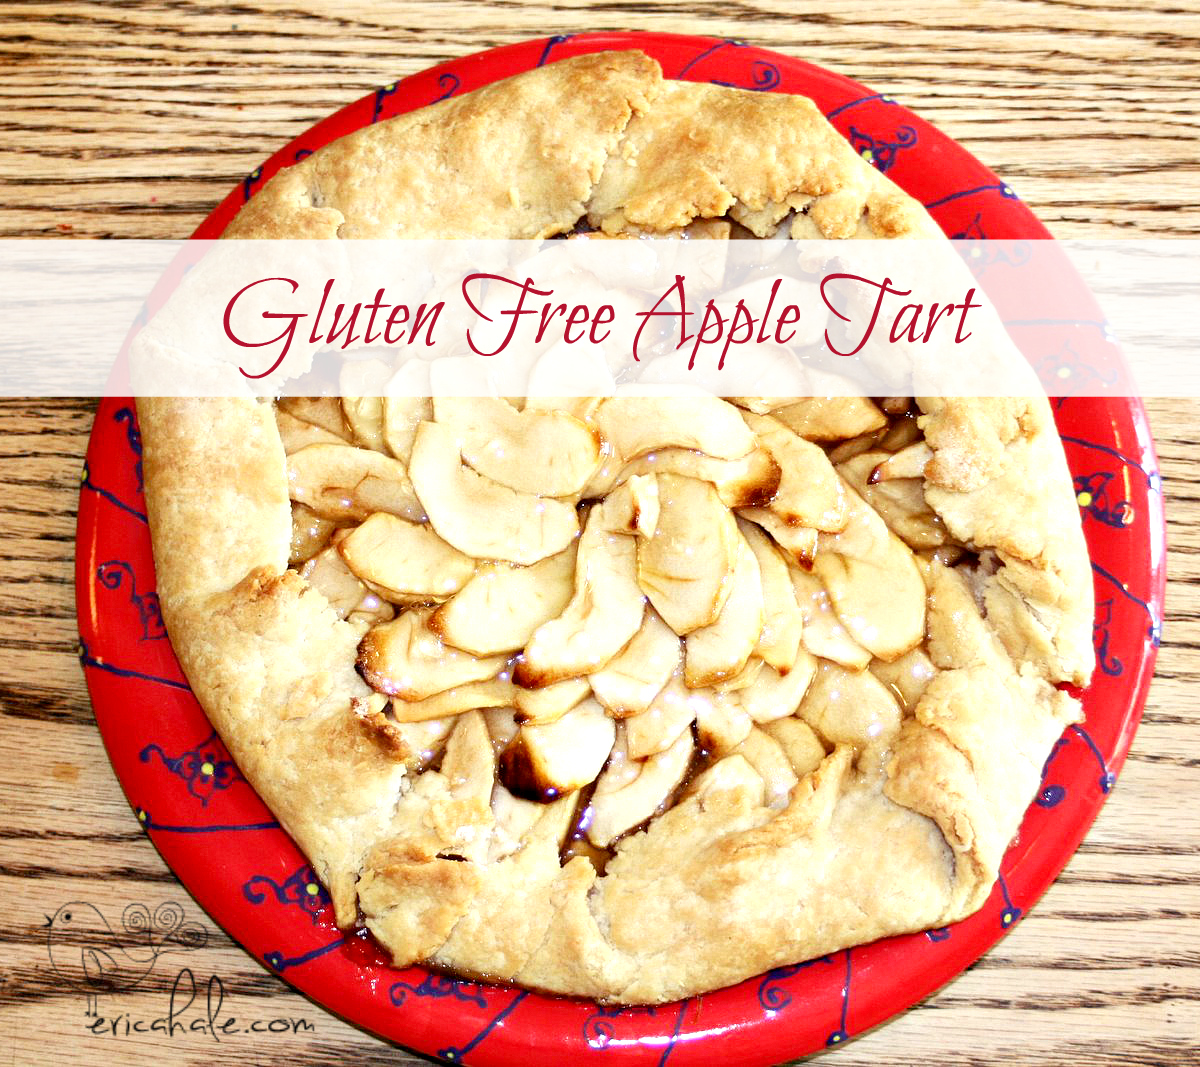 Recipe: Gluten Free Pie Crust and Apple Tart